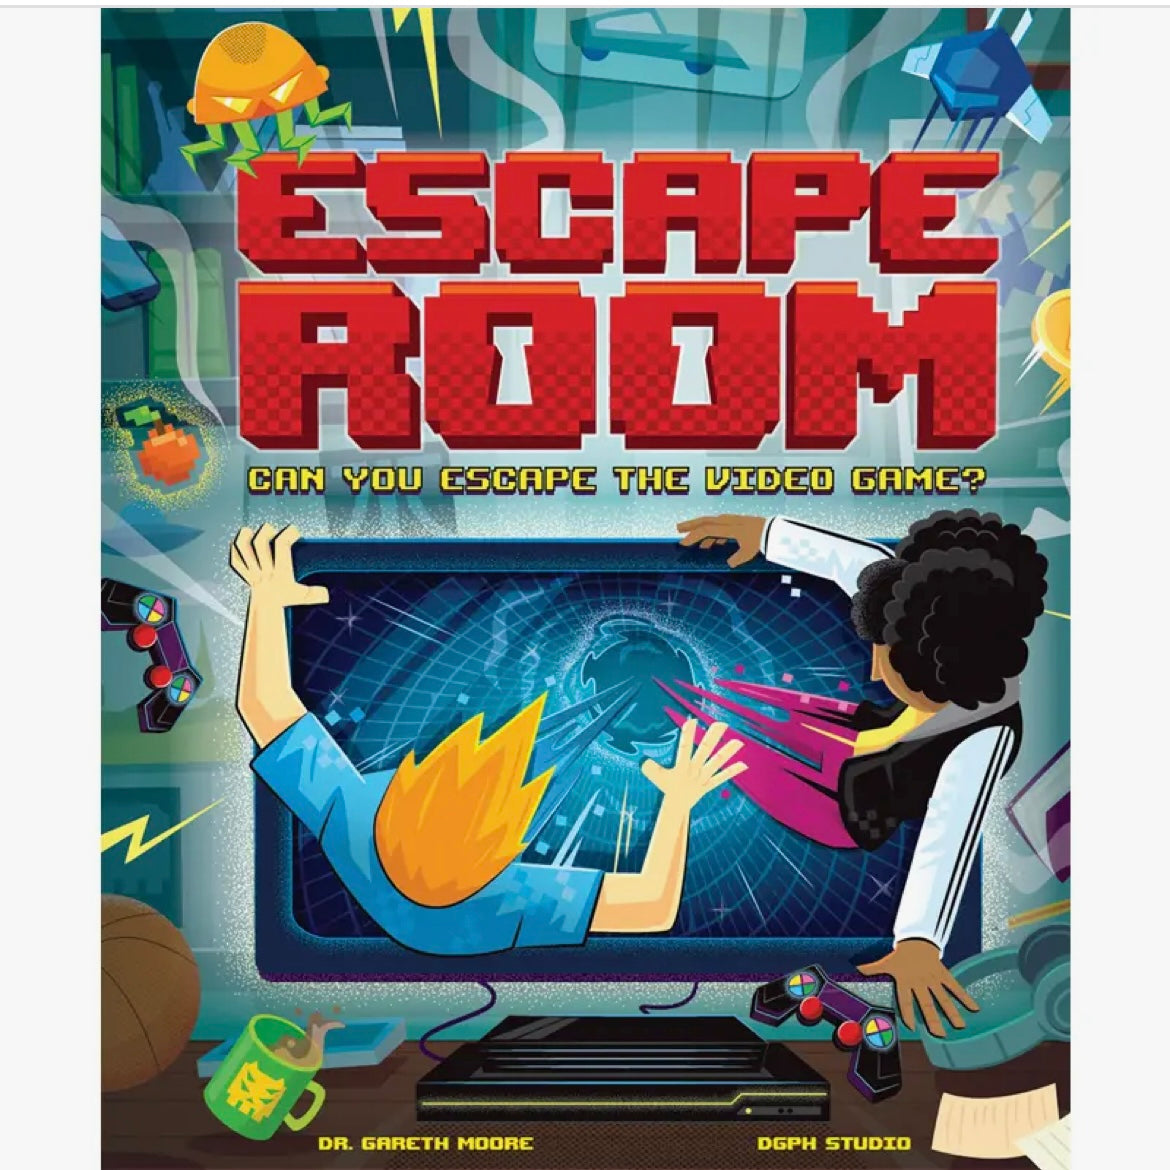 Escape Room - Can You Escape the Video Game?